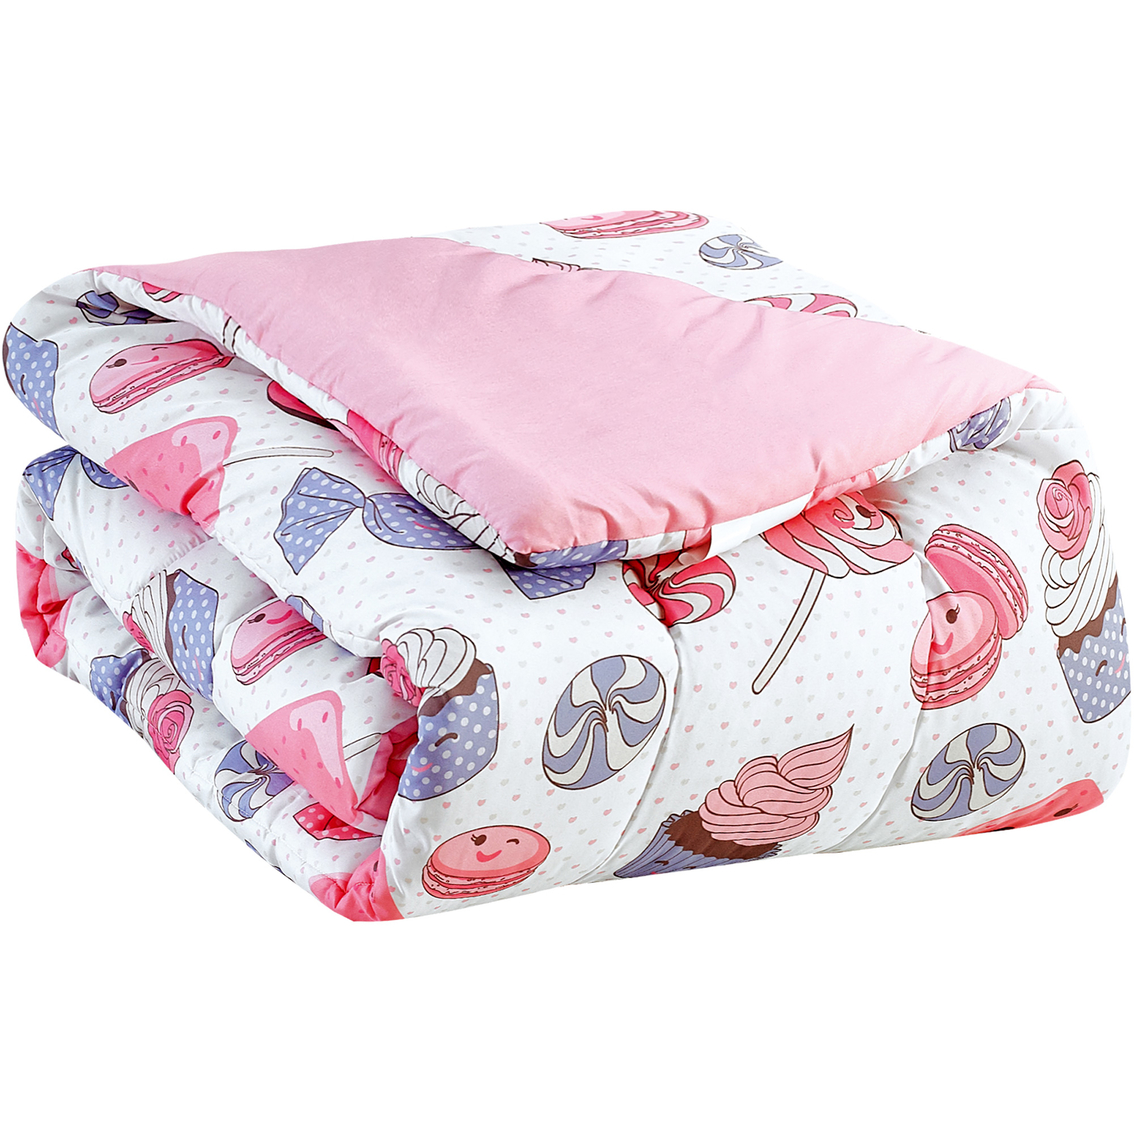 Gizmo Kids Sweet Treats 3 pc. Comforter Set - Image 2 of 3